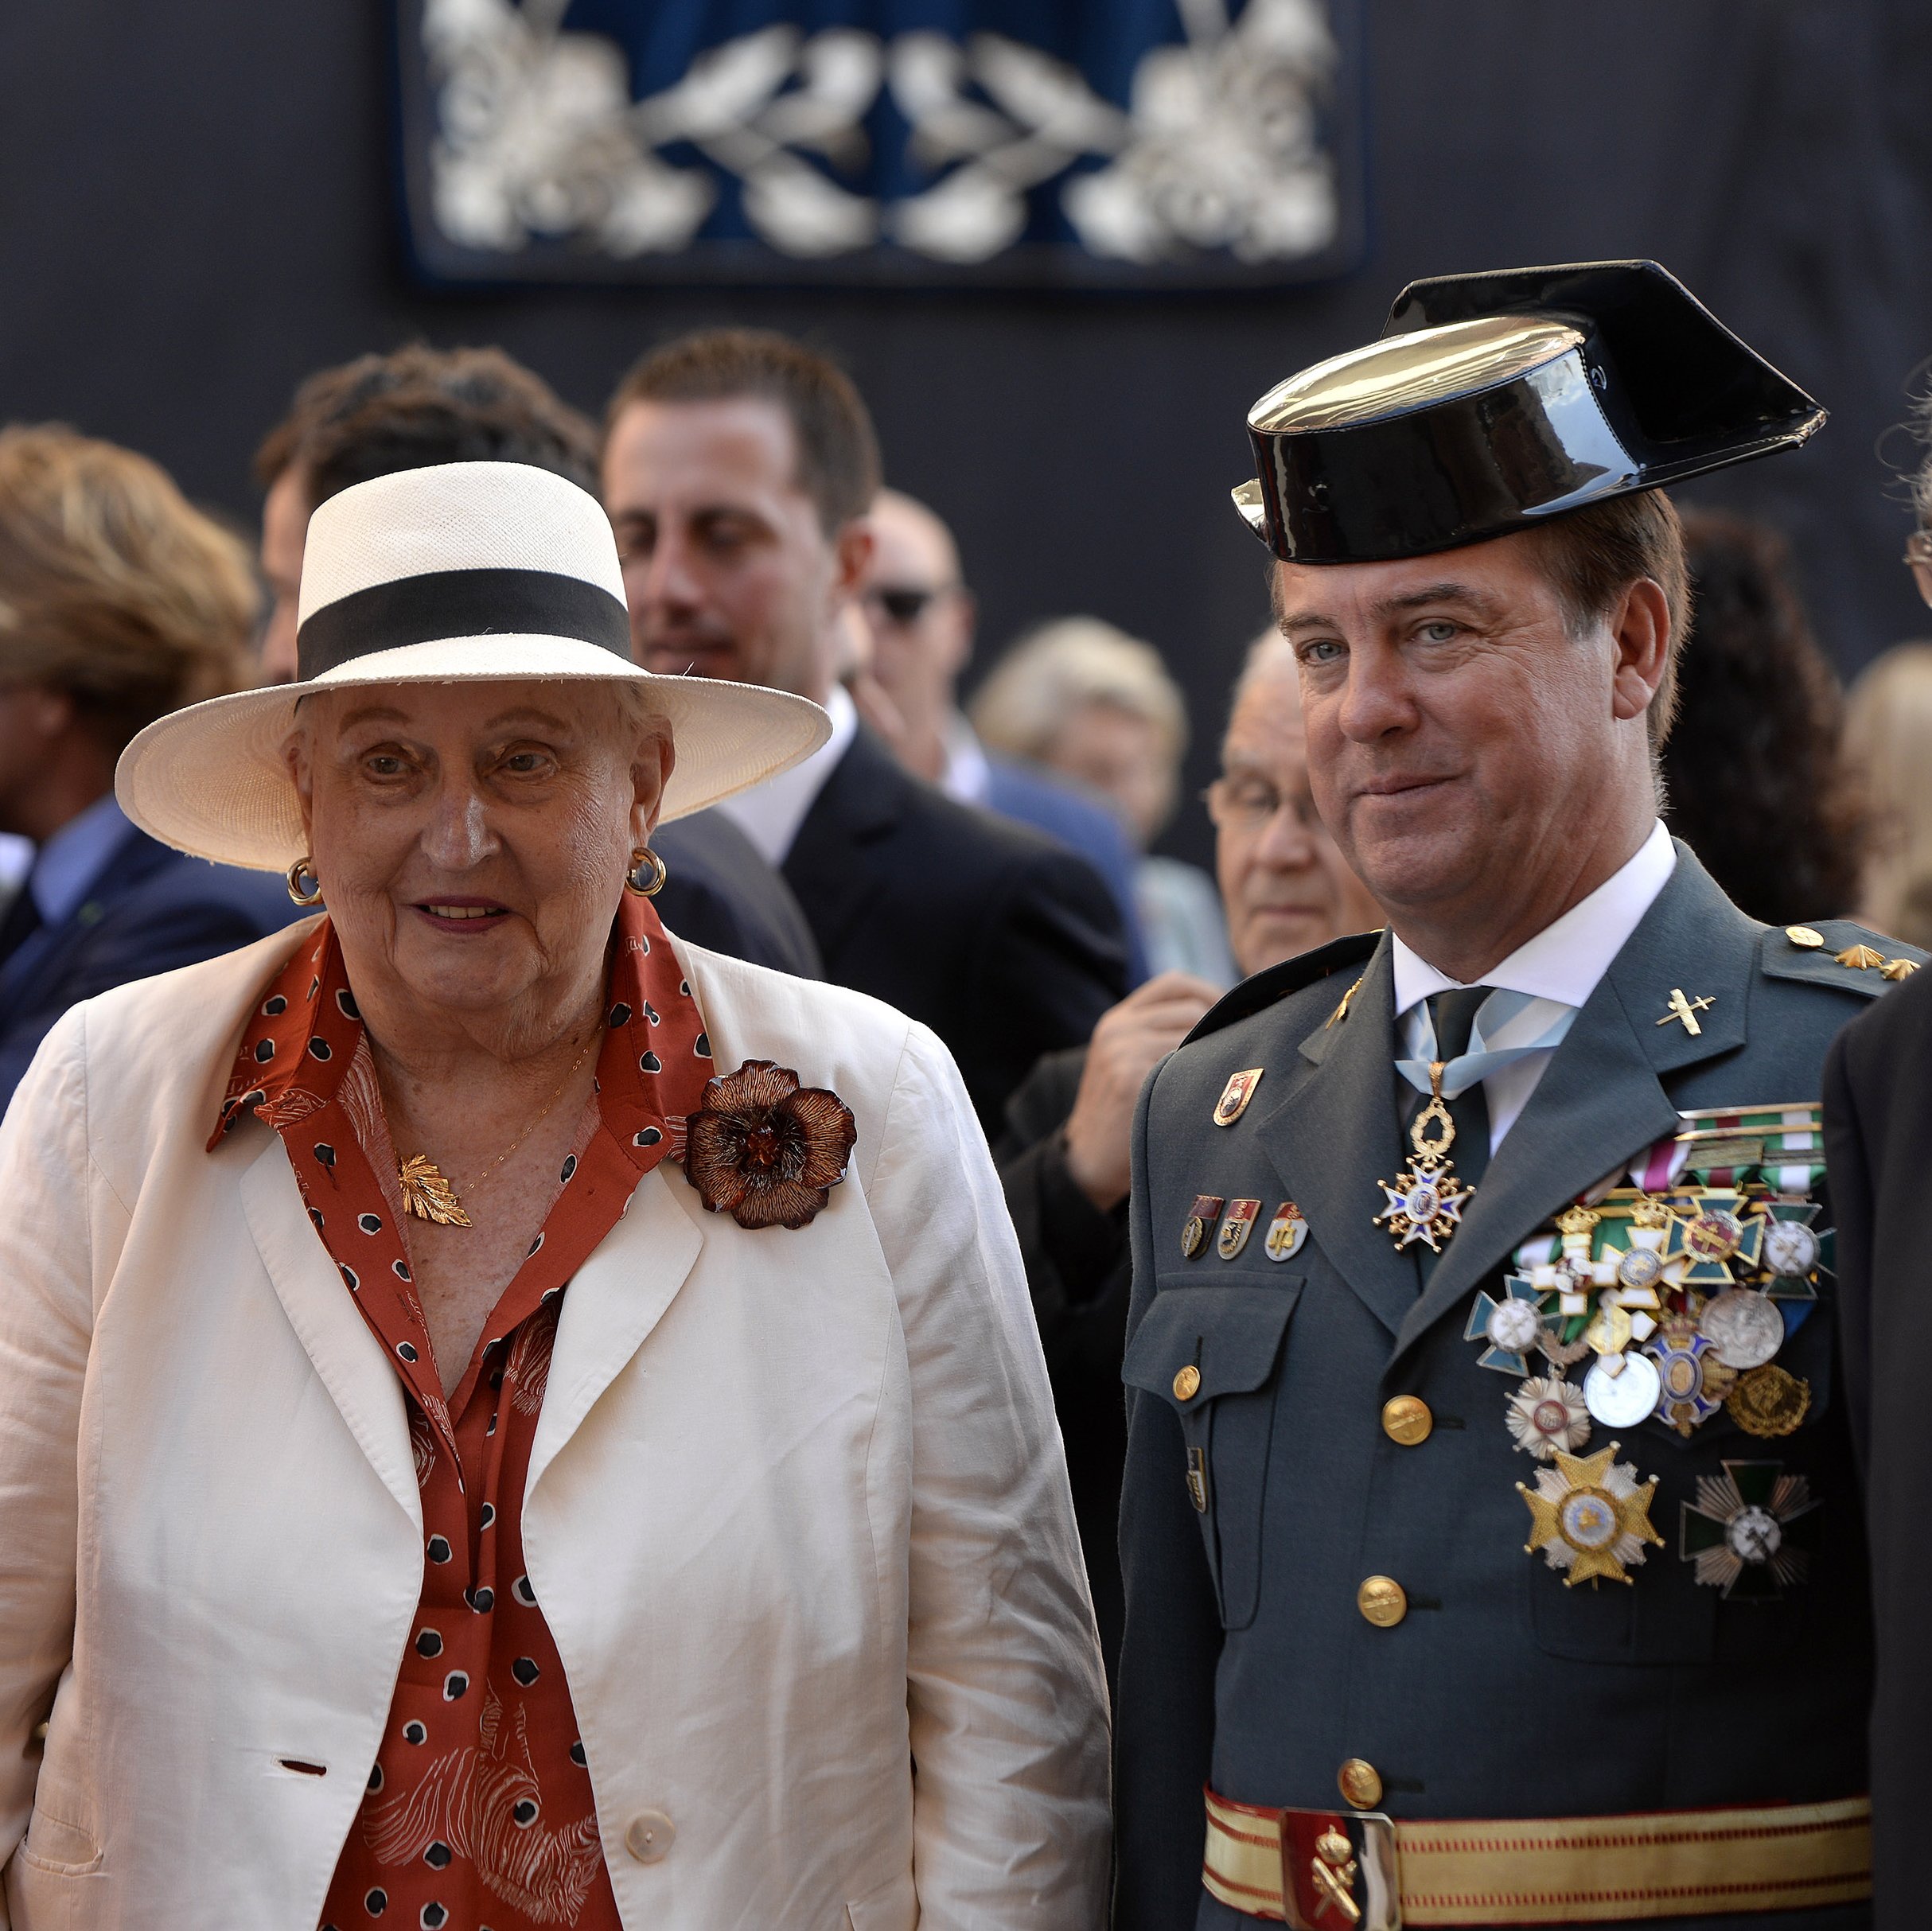 Un diario vasco destroza a Pilar de Borbón, tía del rey: "Imbécil, fascista"